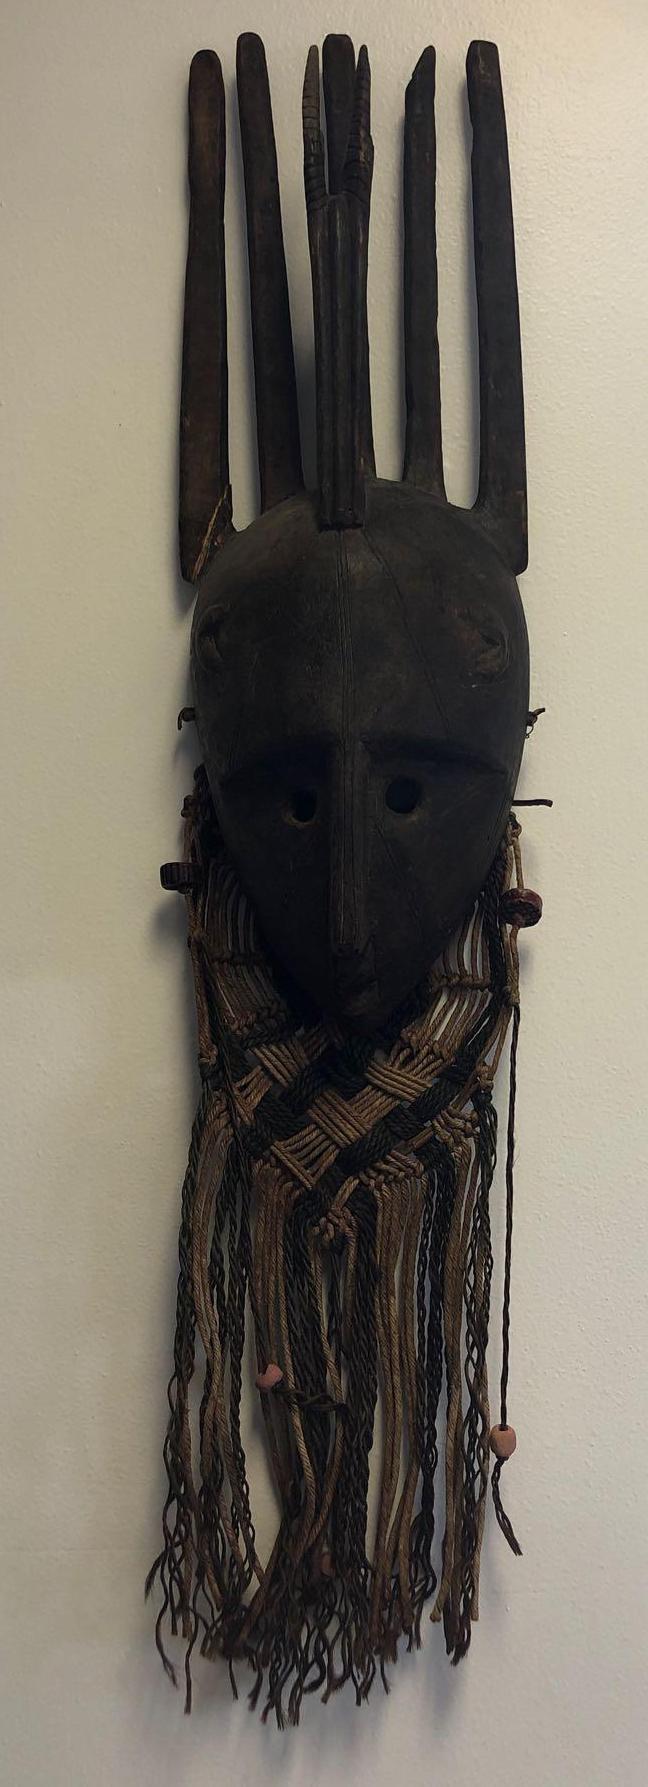 Antique mask